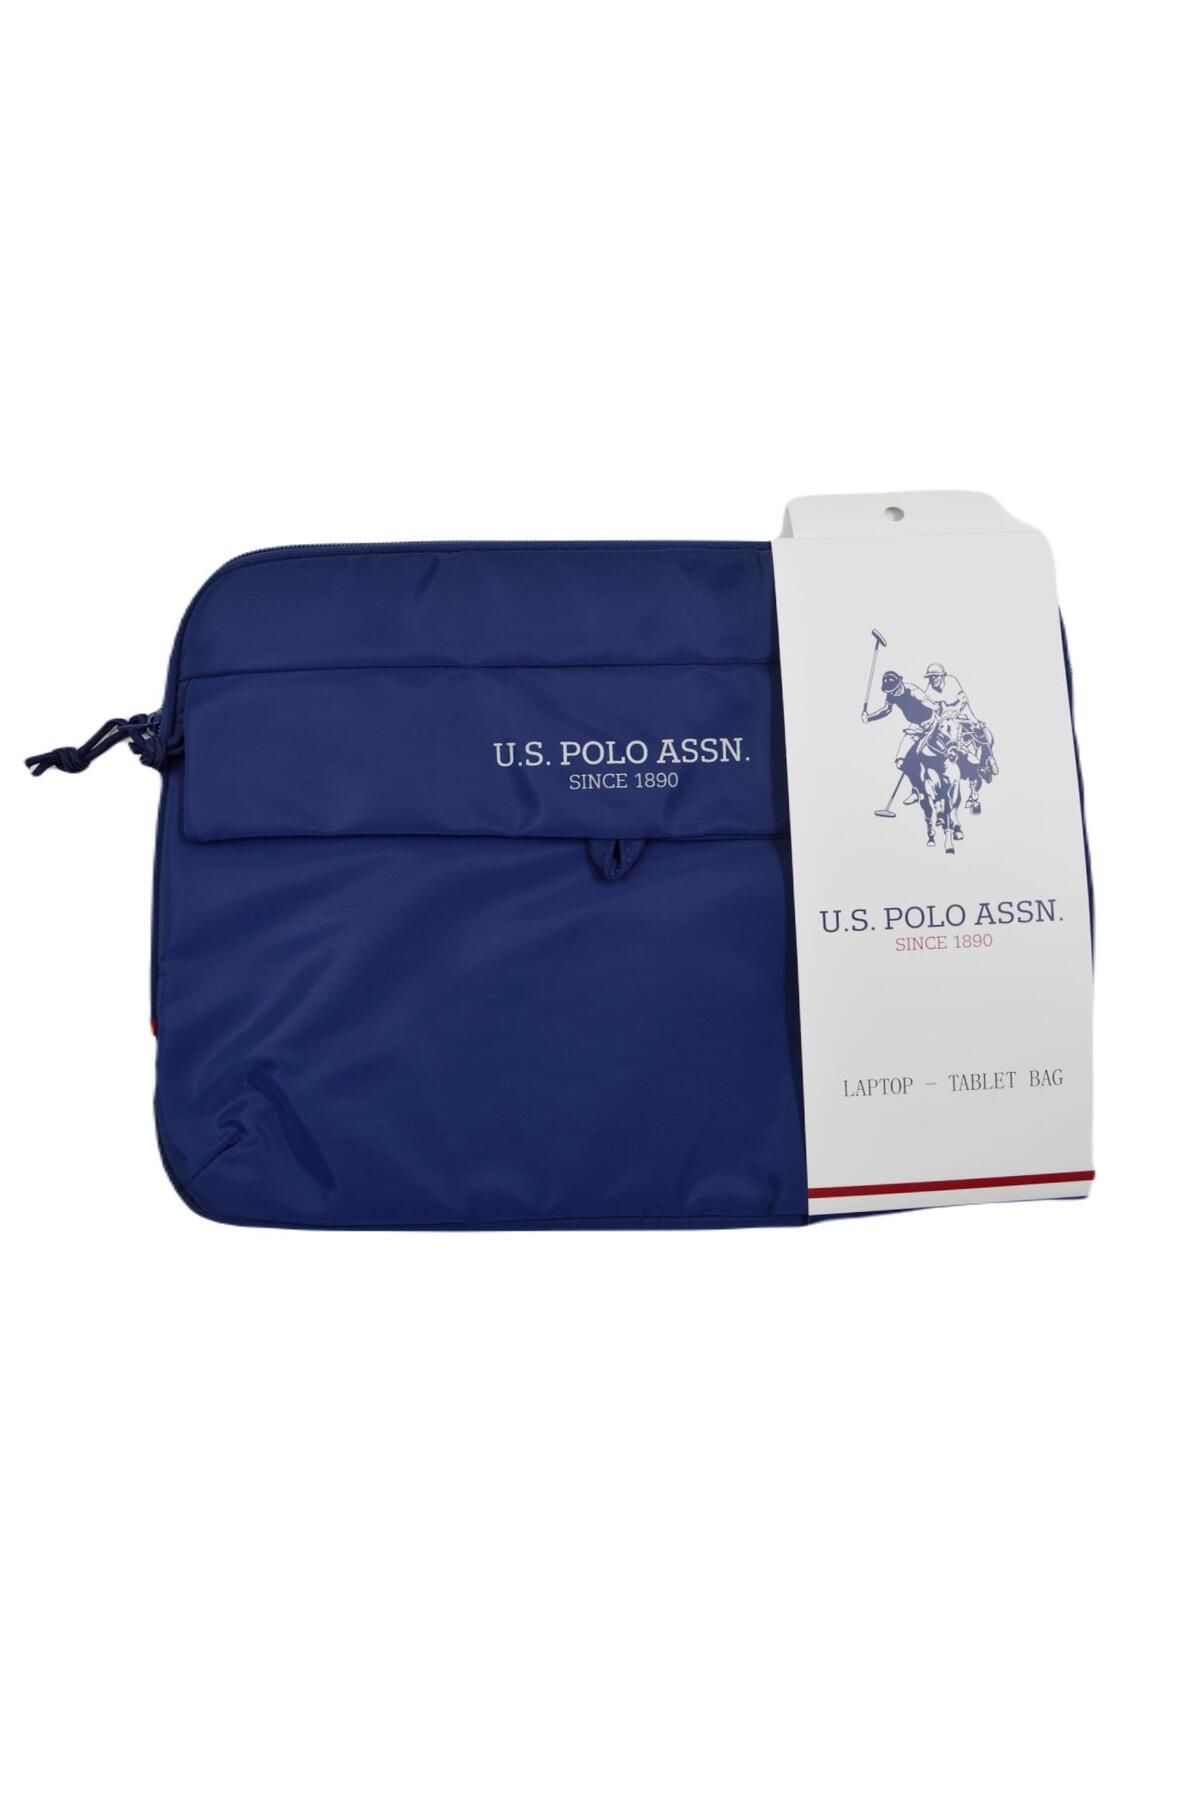 U.S. Polo Assn. Us Polo Assn Laptop Tablet Evrak Çantası Lacivert PLEVR23684